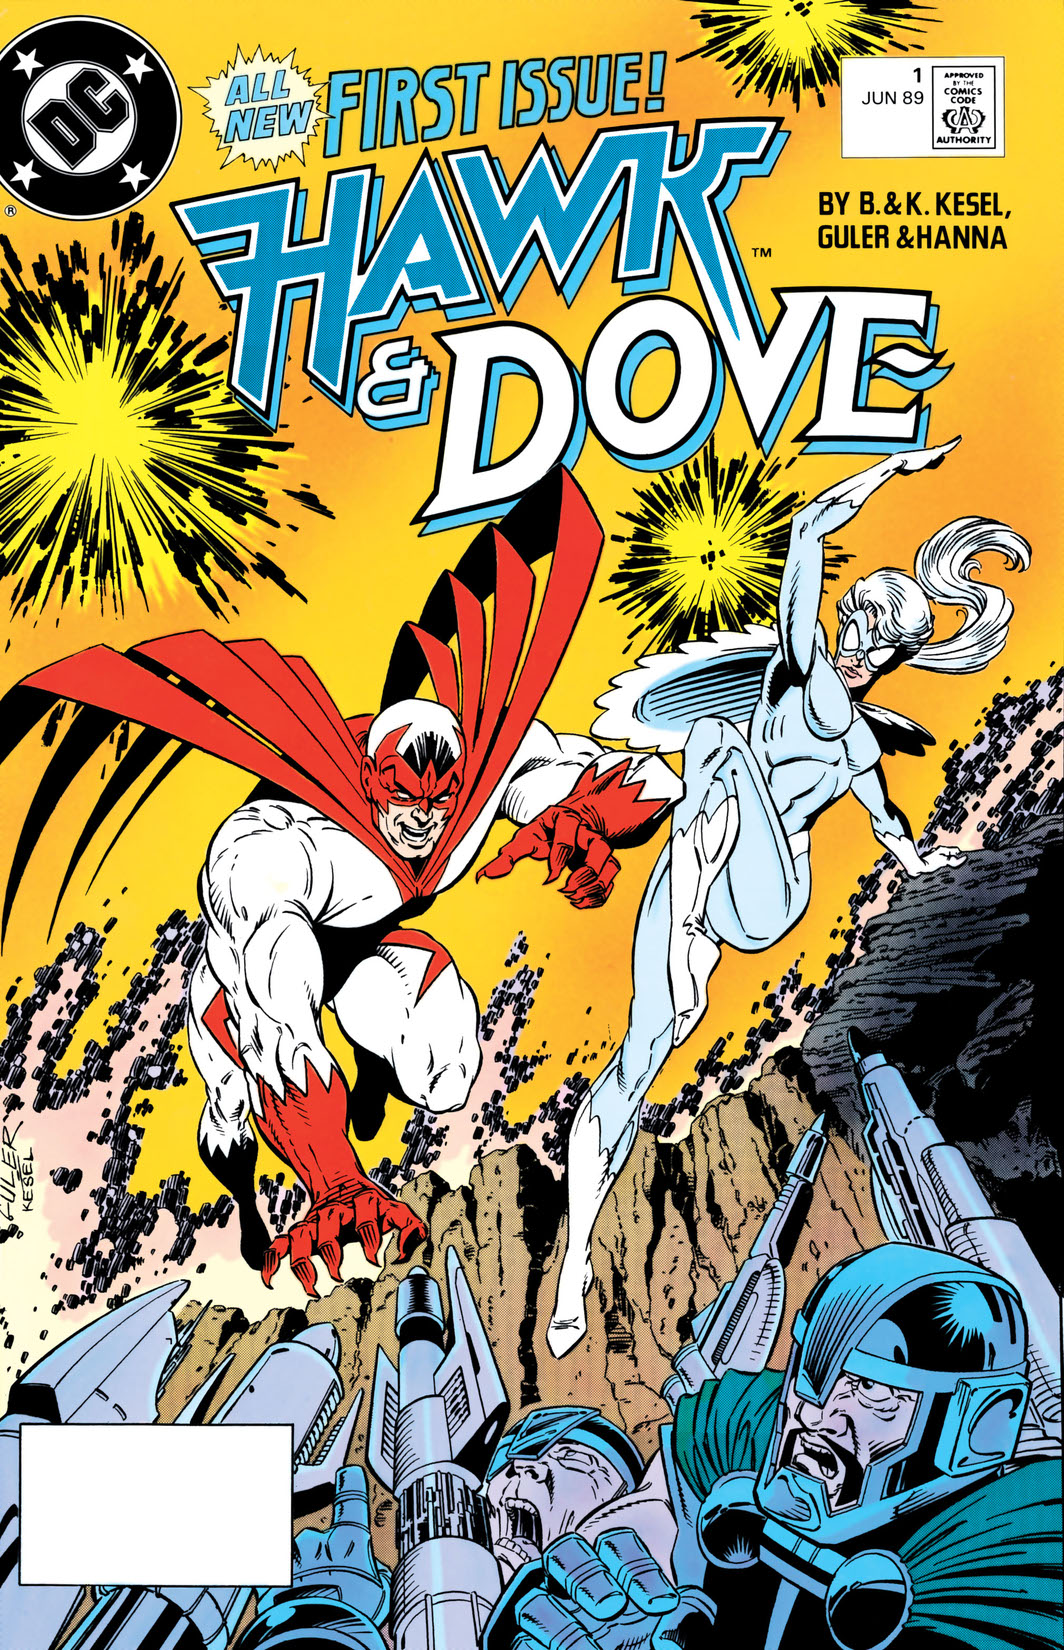 Hawk & Dove (1989-) #1 preview images